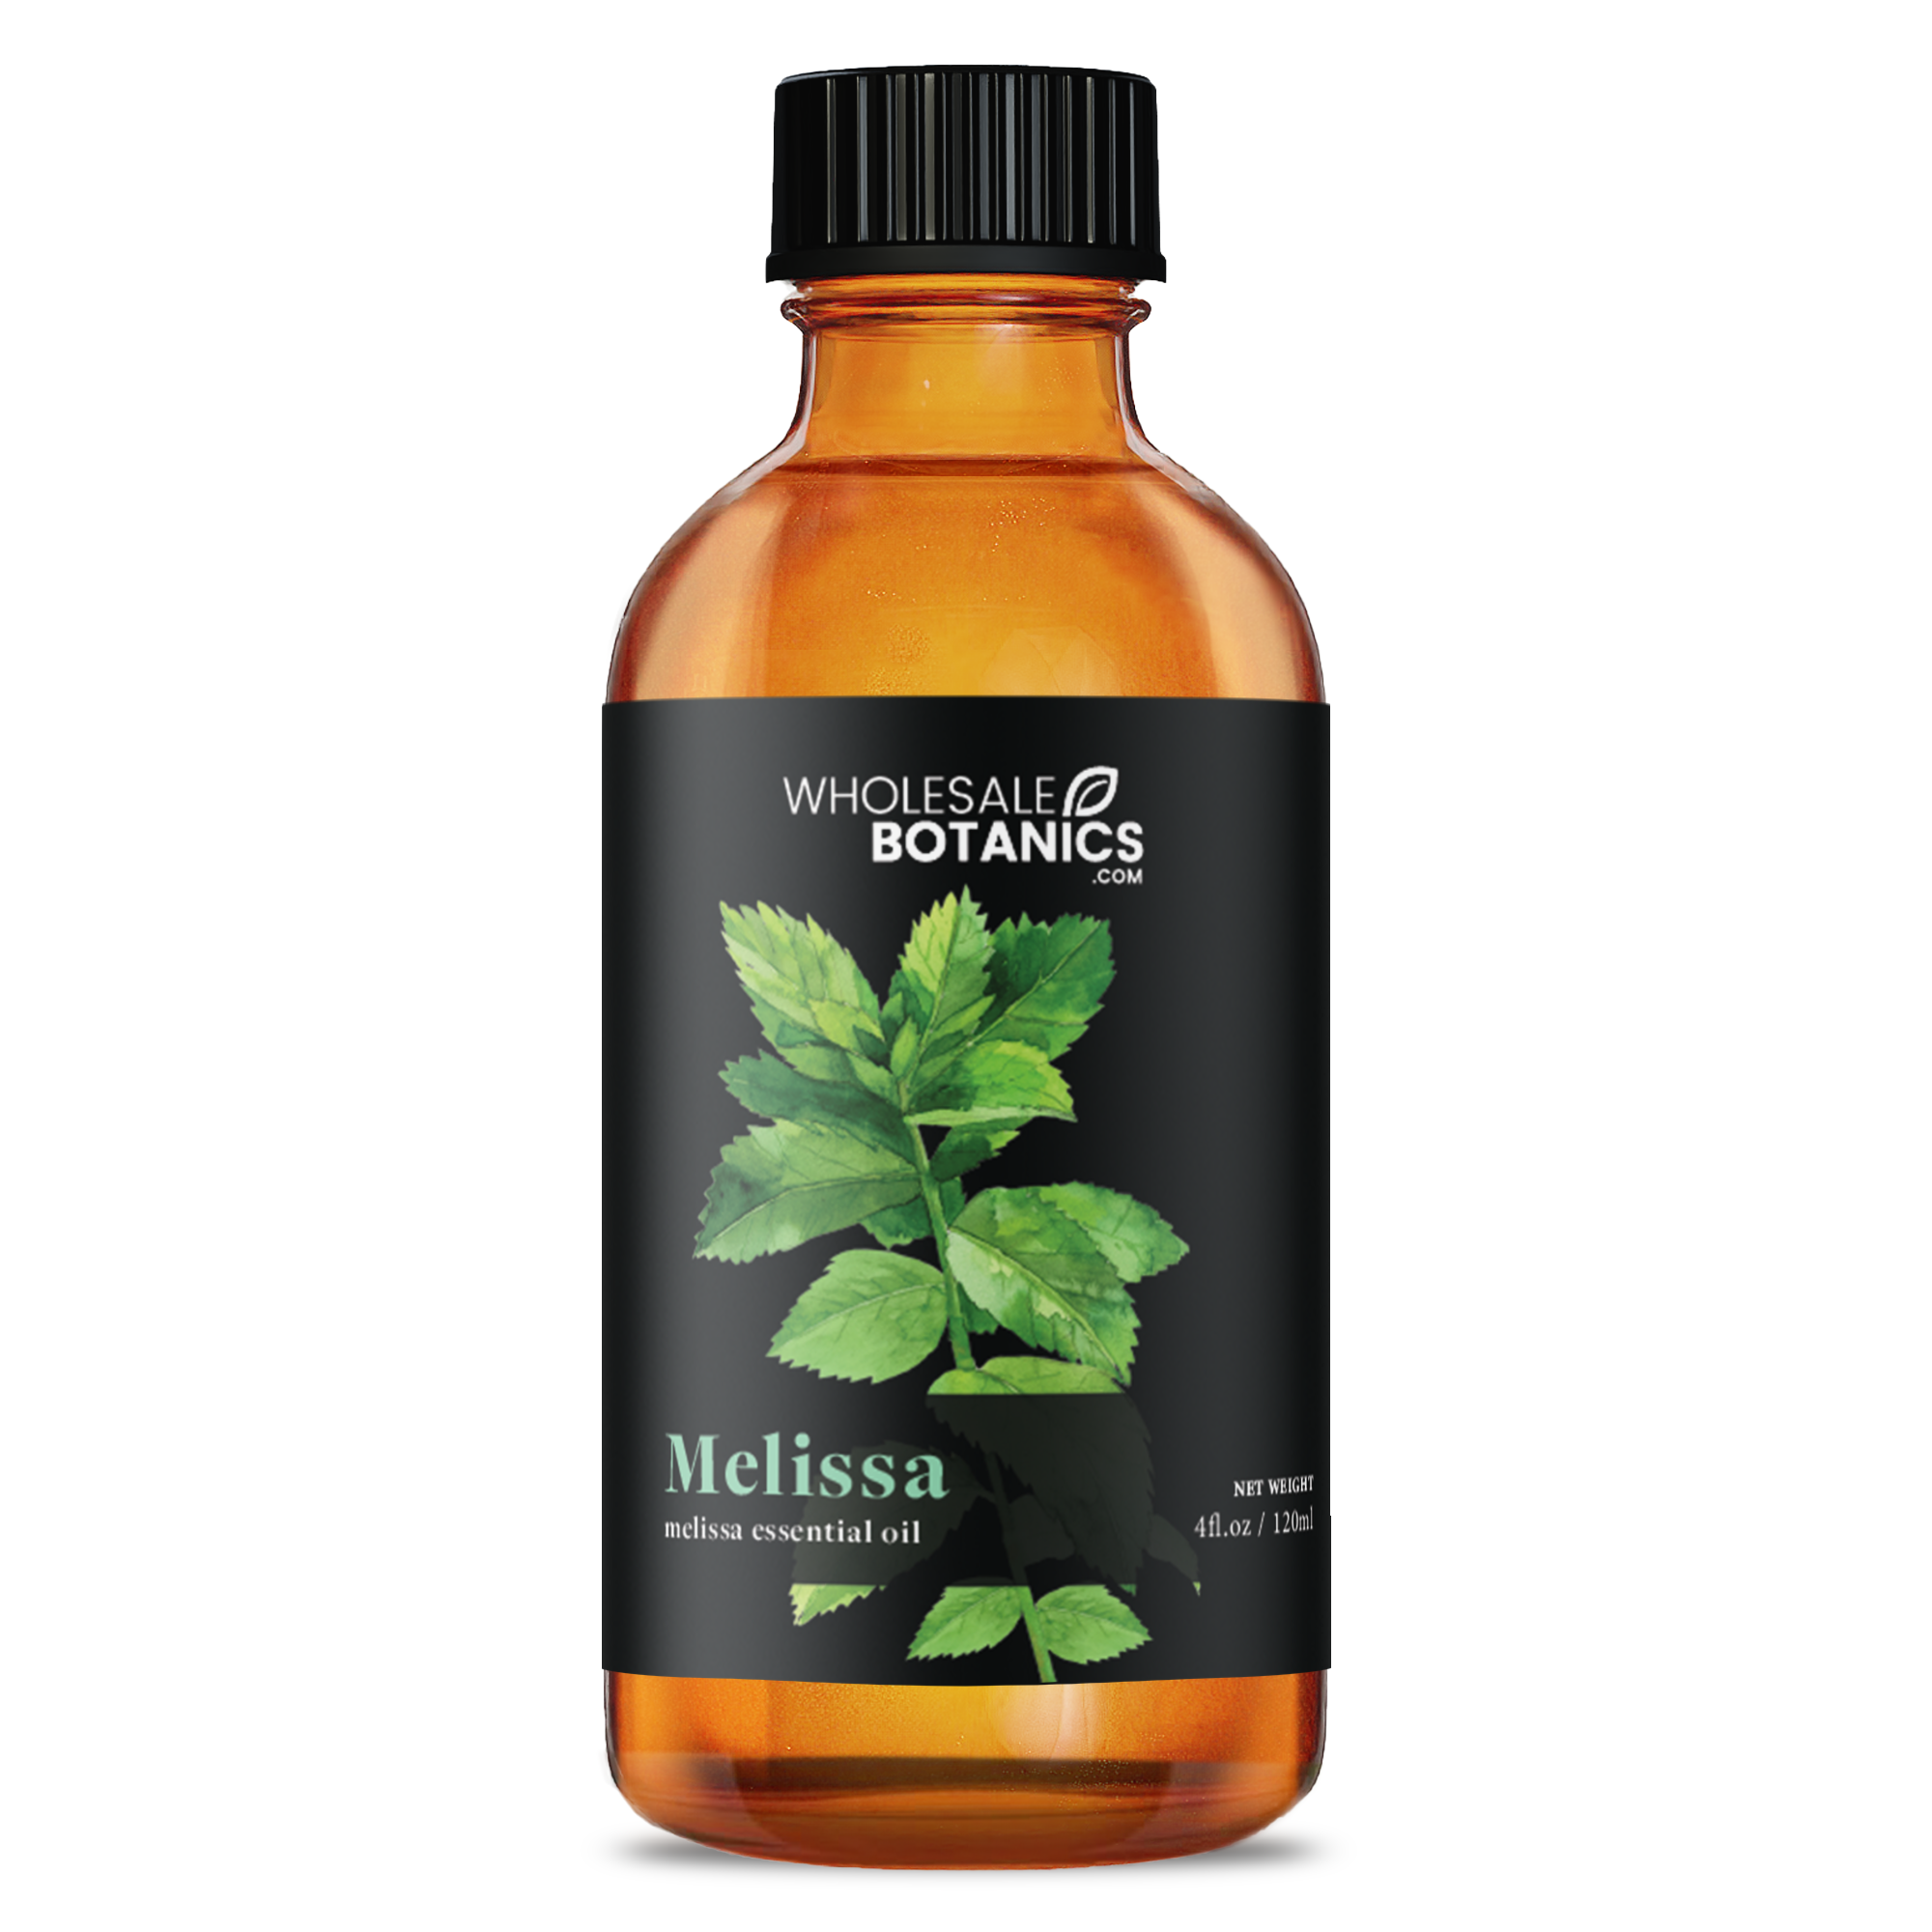 Melissa Essential Oil